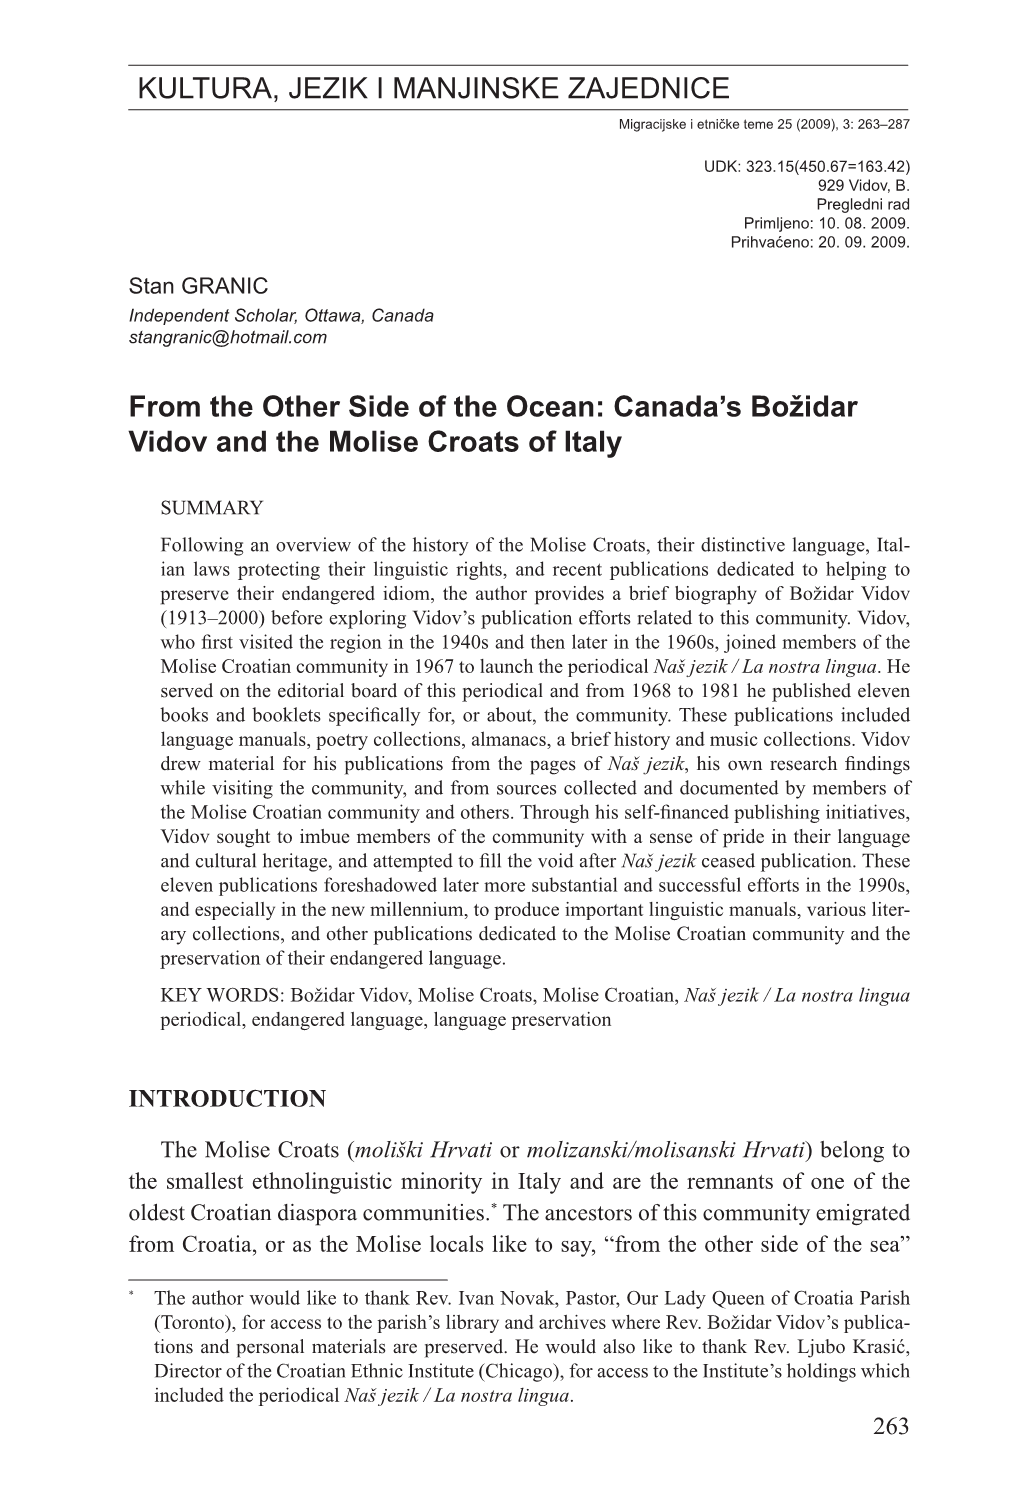 KULTURA, JEZIK I MANJINSKE ZAJEDNICE from the Other Side of the Ocean: Canada's Božidar Vidov and the Molise Croats of Italy